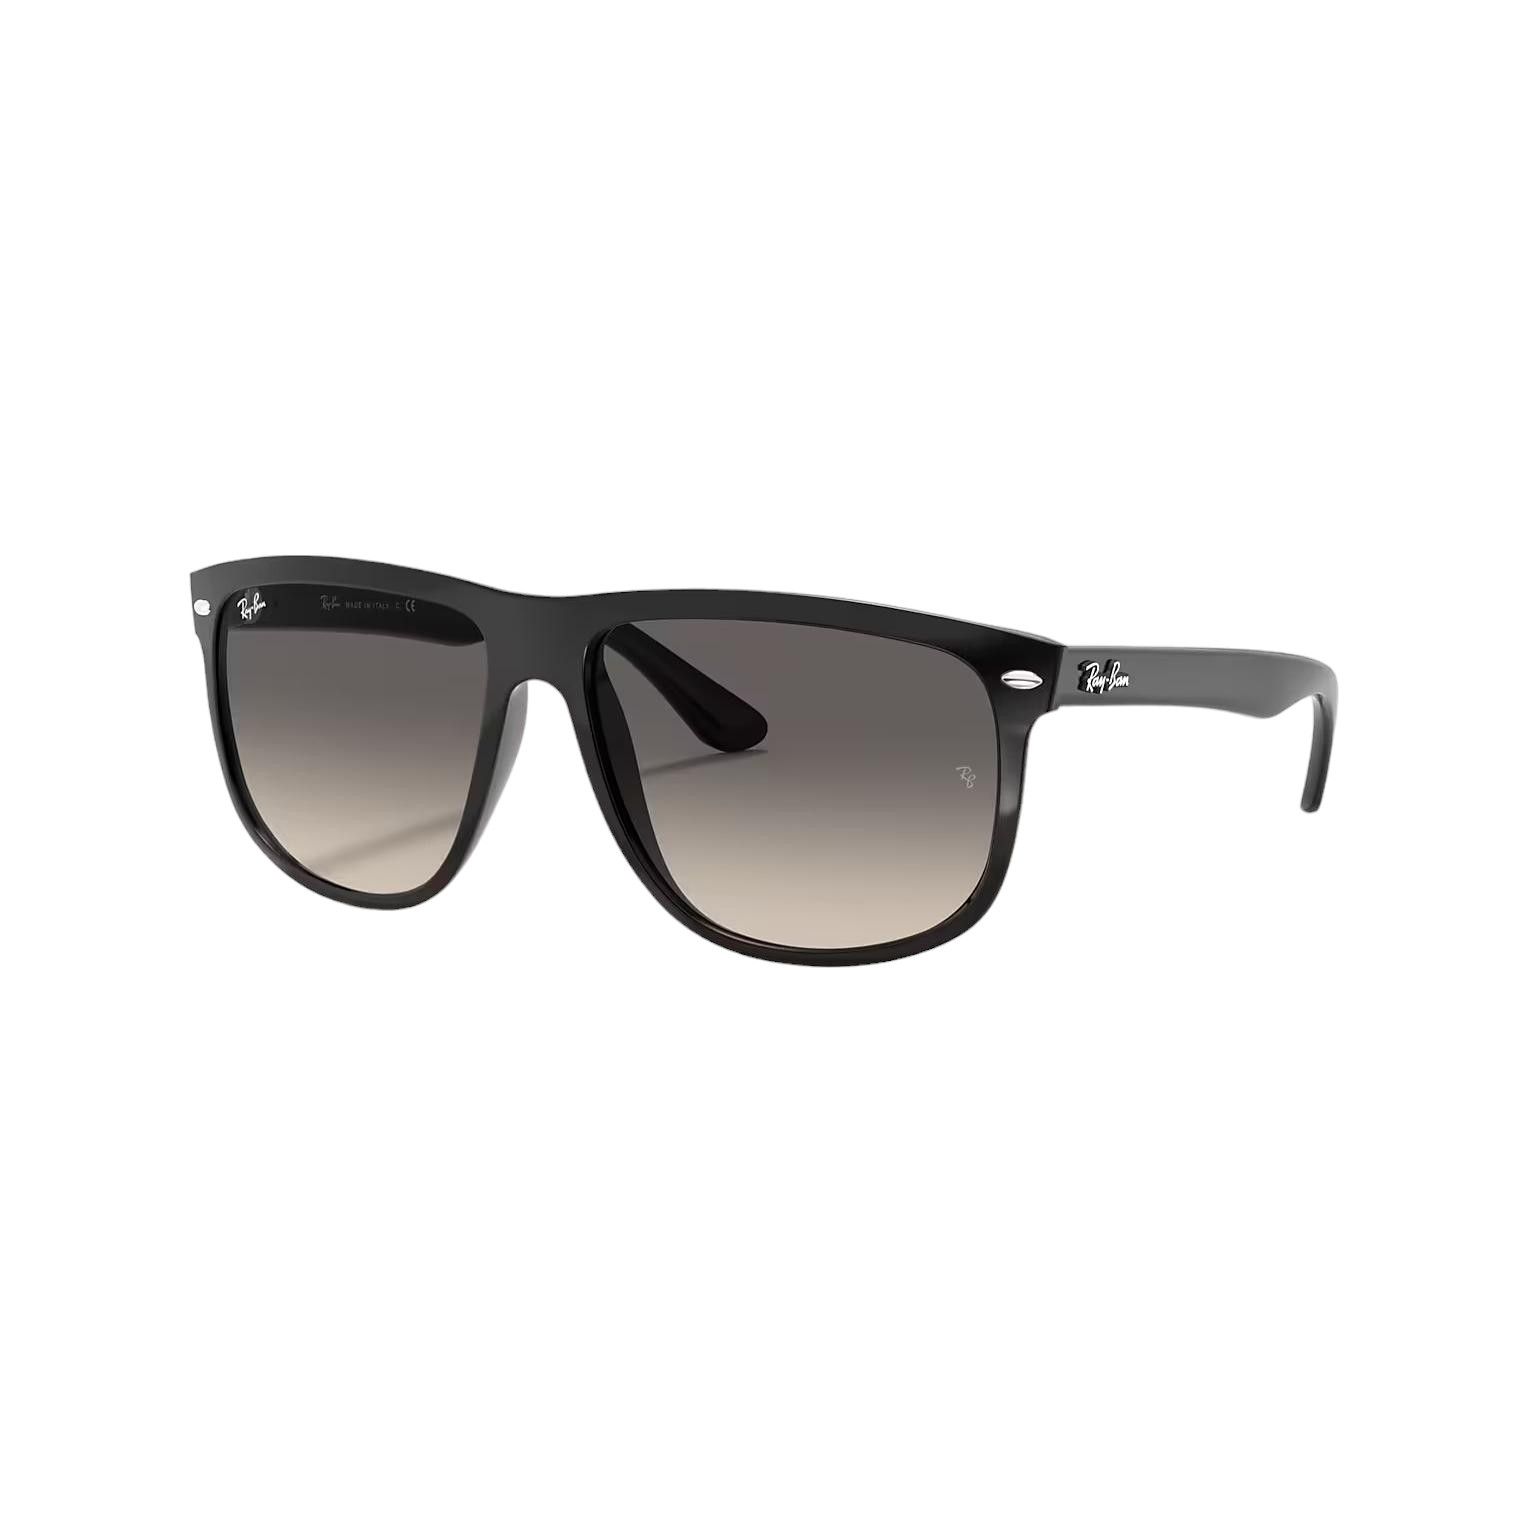 RB4147 Square Sunglasses 601 32 - size 60